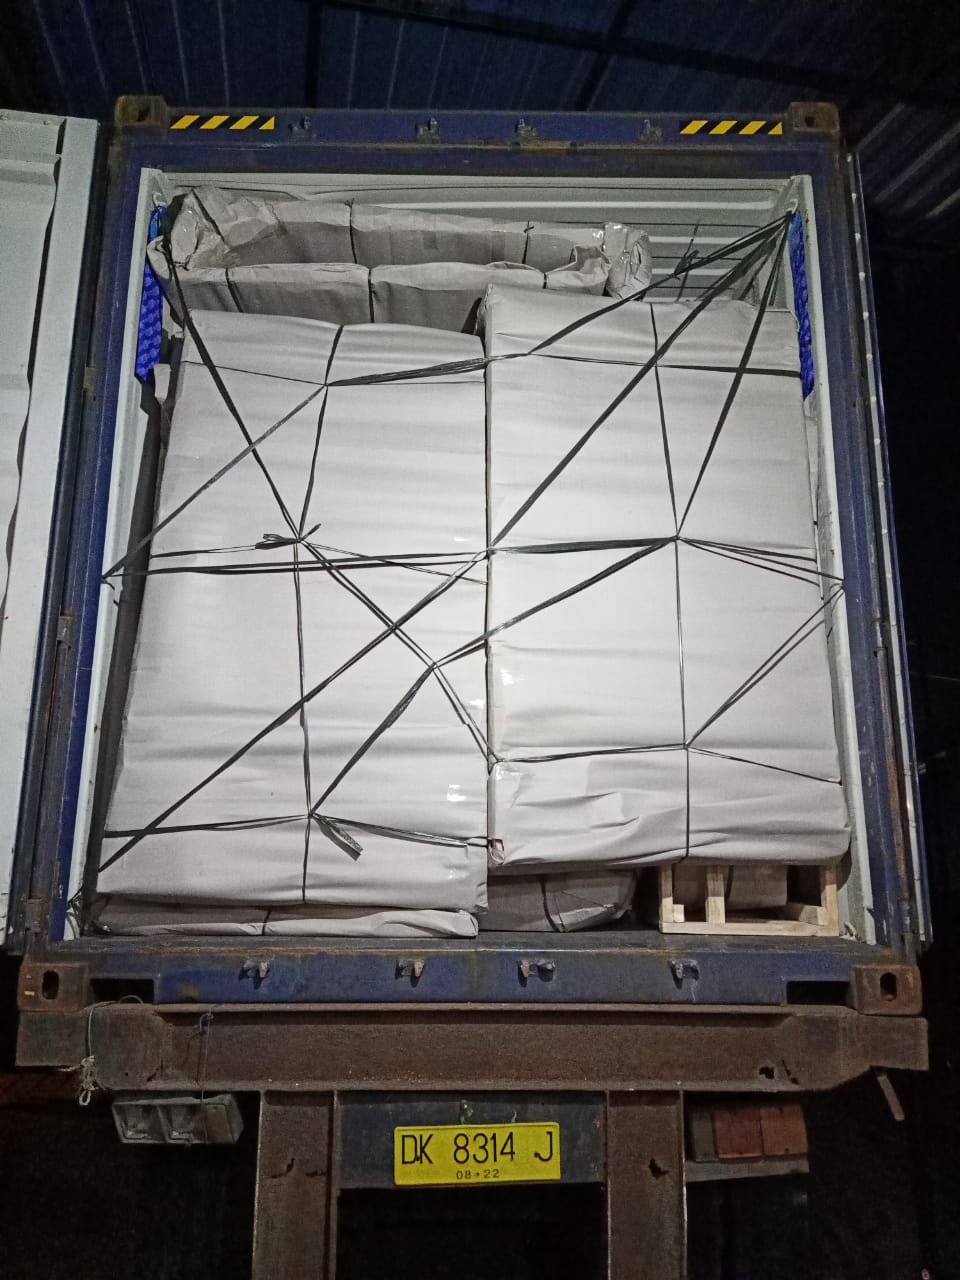 Bali Cargo Shipping